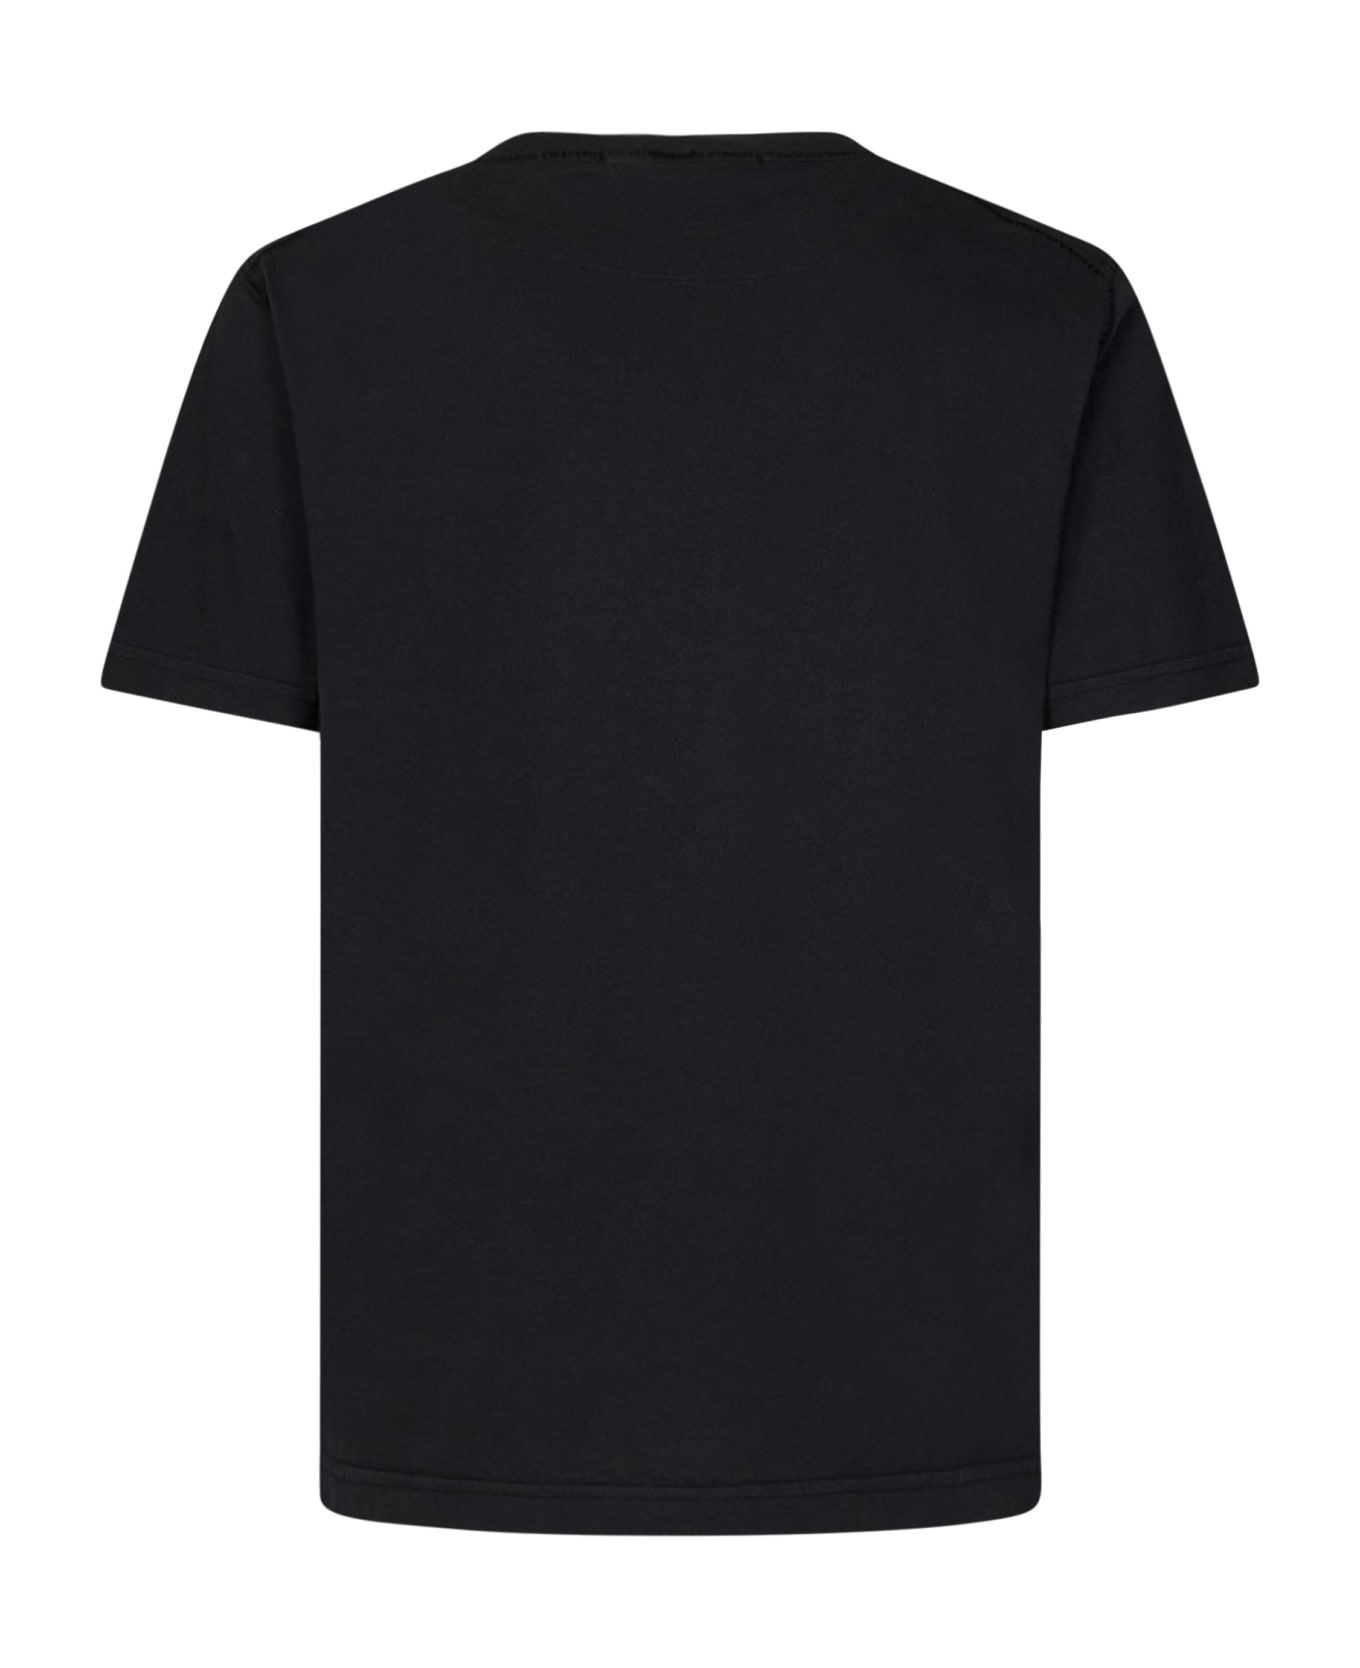 Stone Island T-shirt - Black